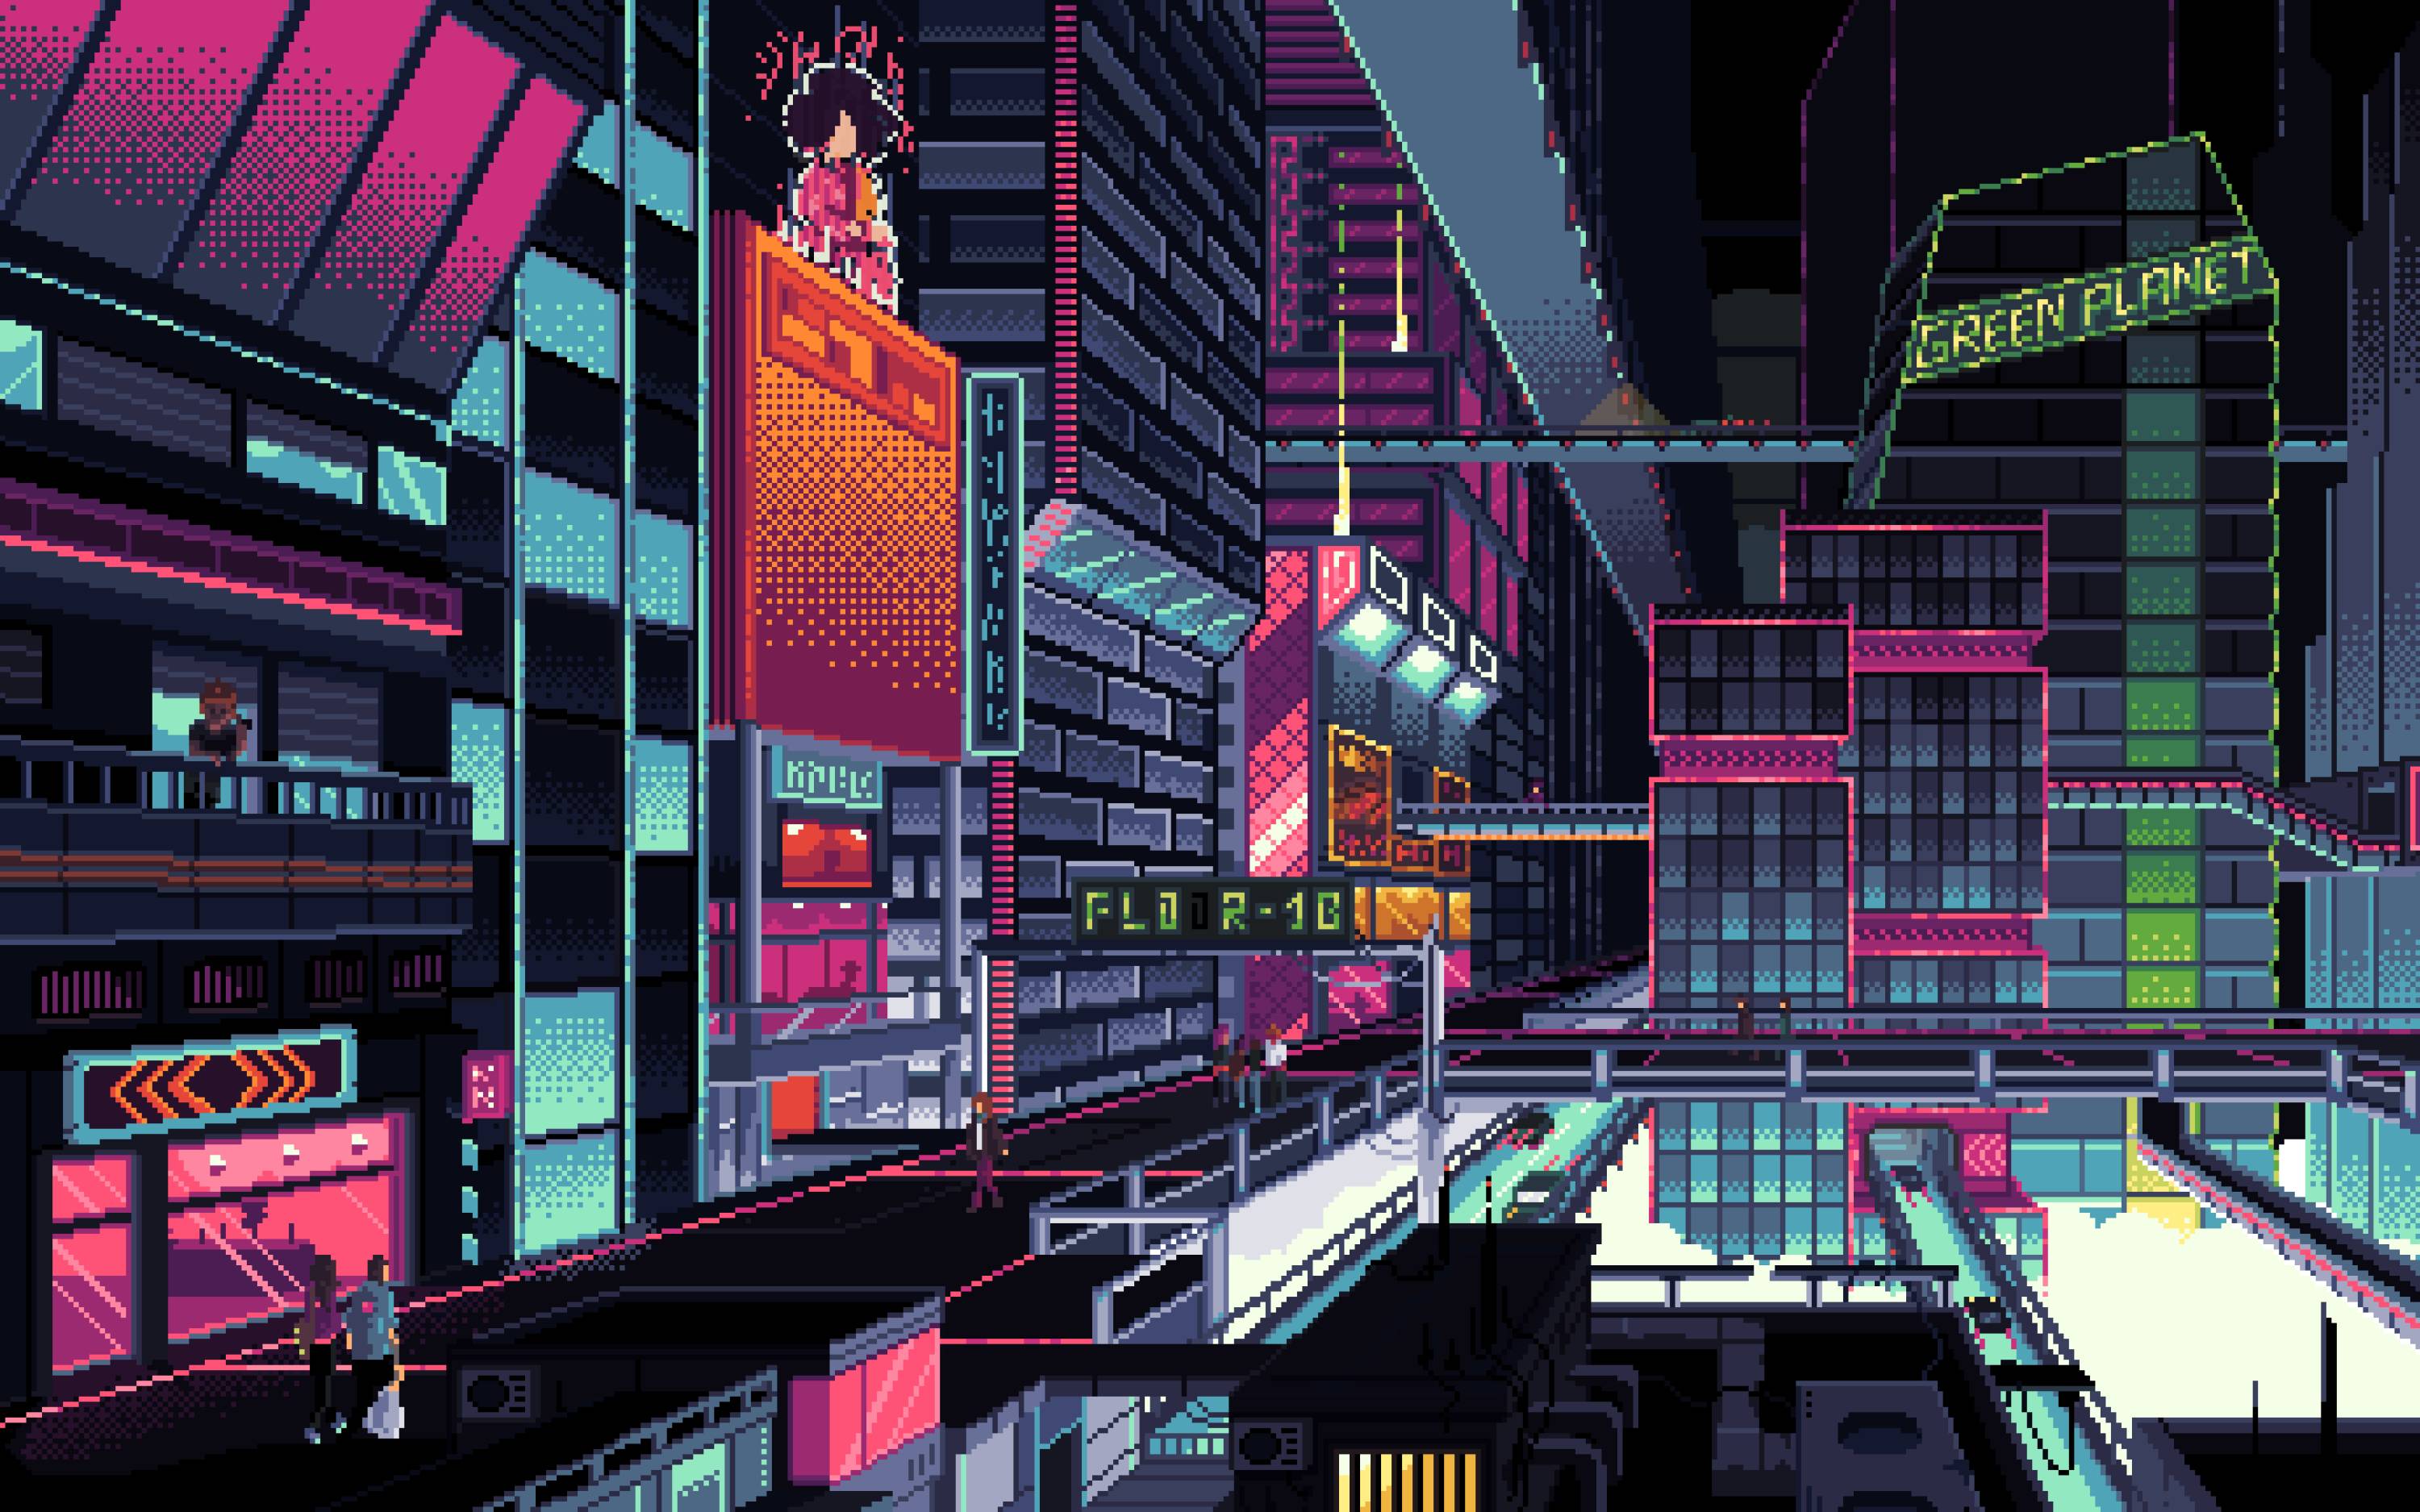 Cyberpunk City Pixel Art 3000x1875 Resolution Wallpaper, HD Artist 4K Wallpaper, Image, Photo and Background